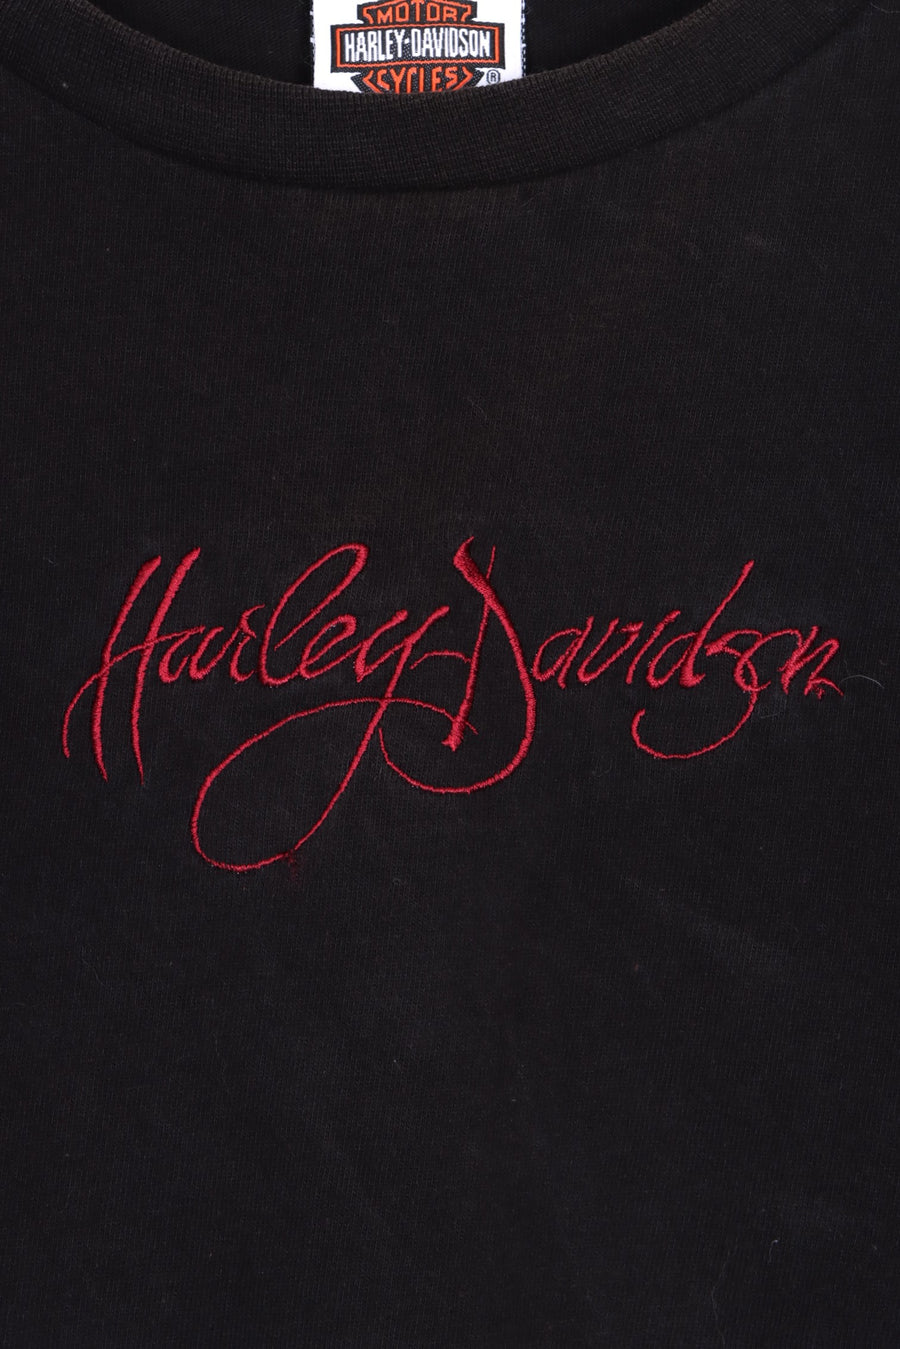 HARLEY DAVIDSON Wisconsin Script Logo Front Back Tee (Women's XL)